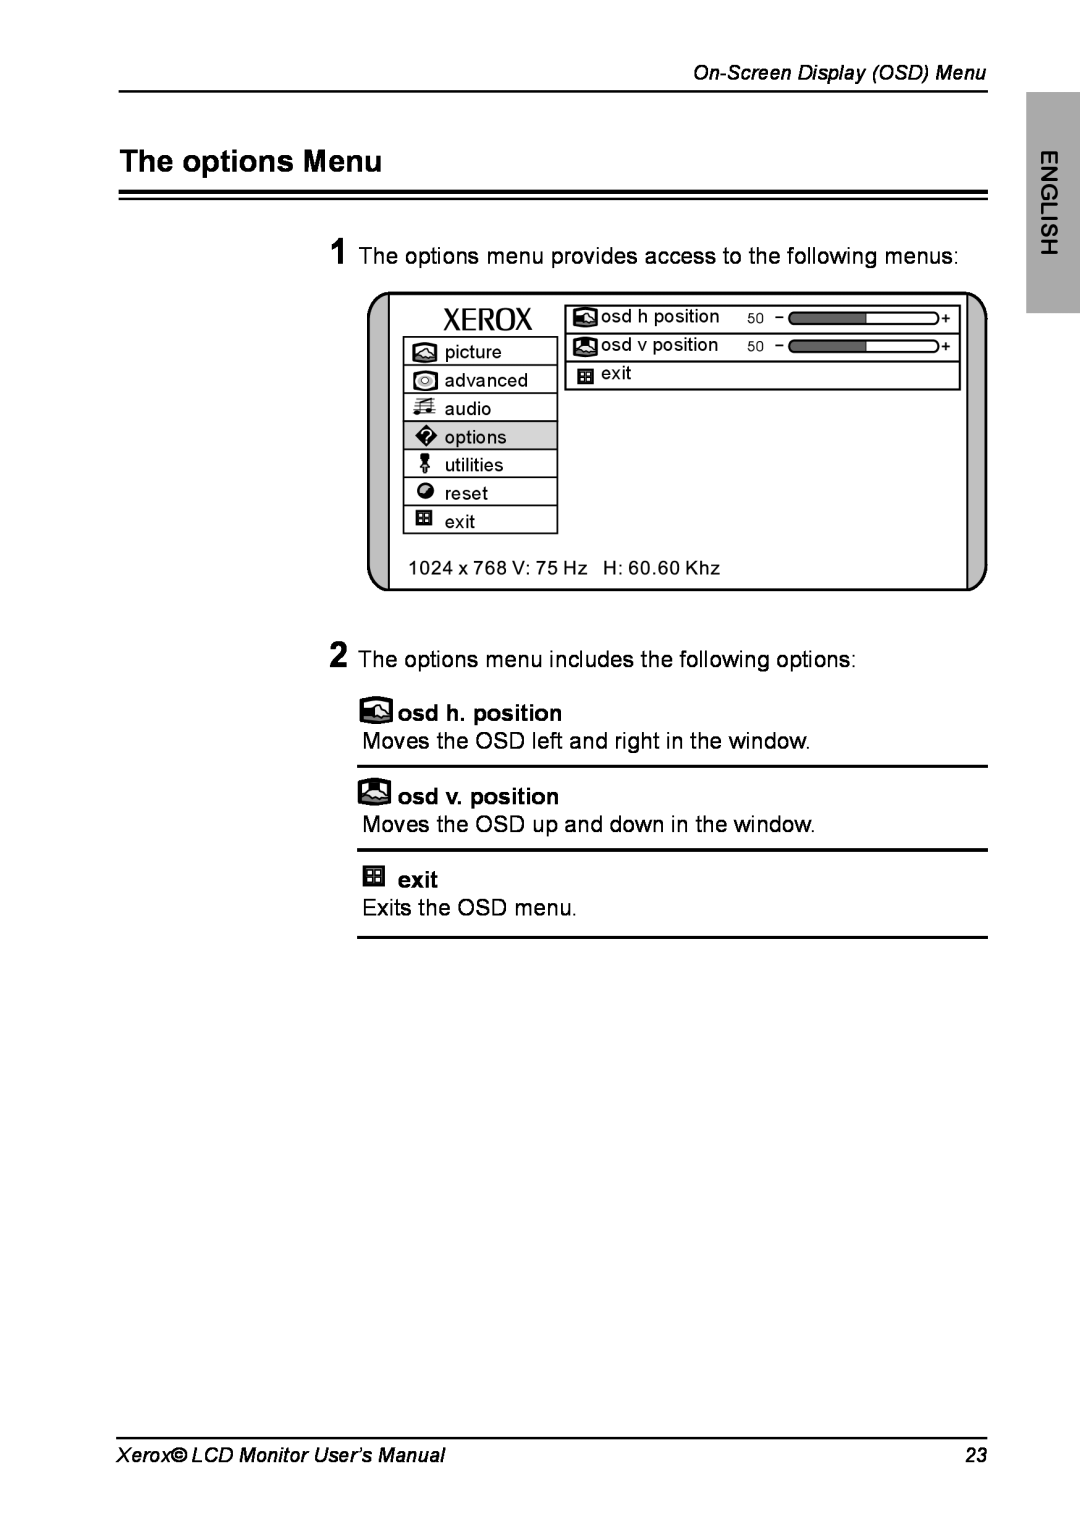 Xerox XM7-19w manual The options Menu, osd h. position, osd v. position, On Description, exit, English 